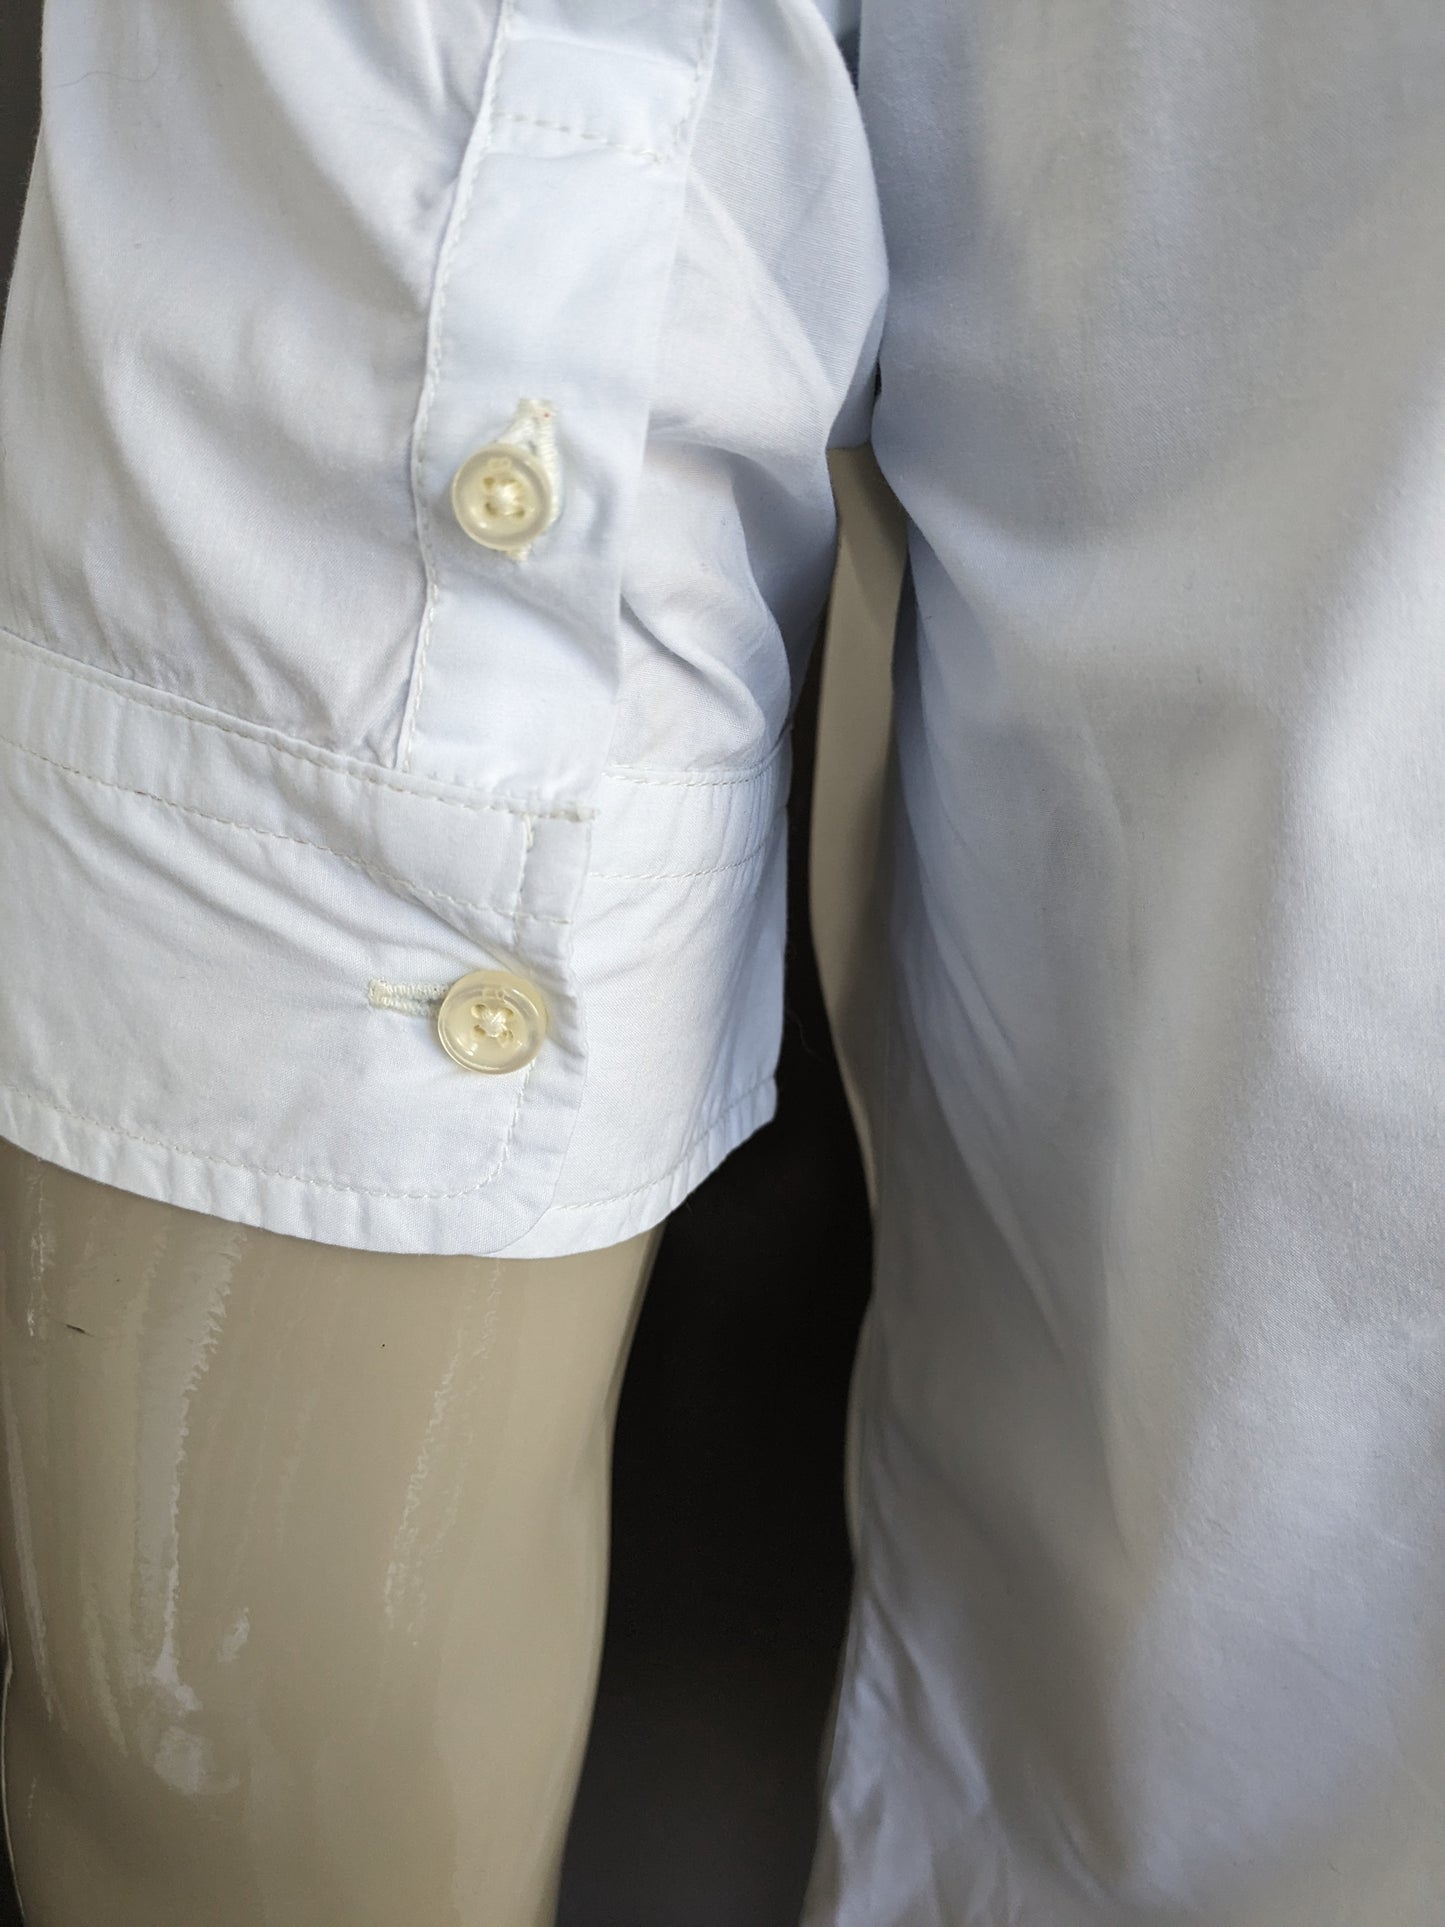 Scotch & Soda Shirt short sleeve. White with print. Size L.